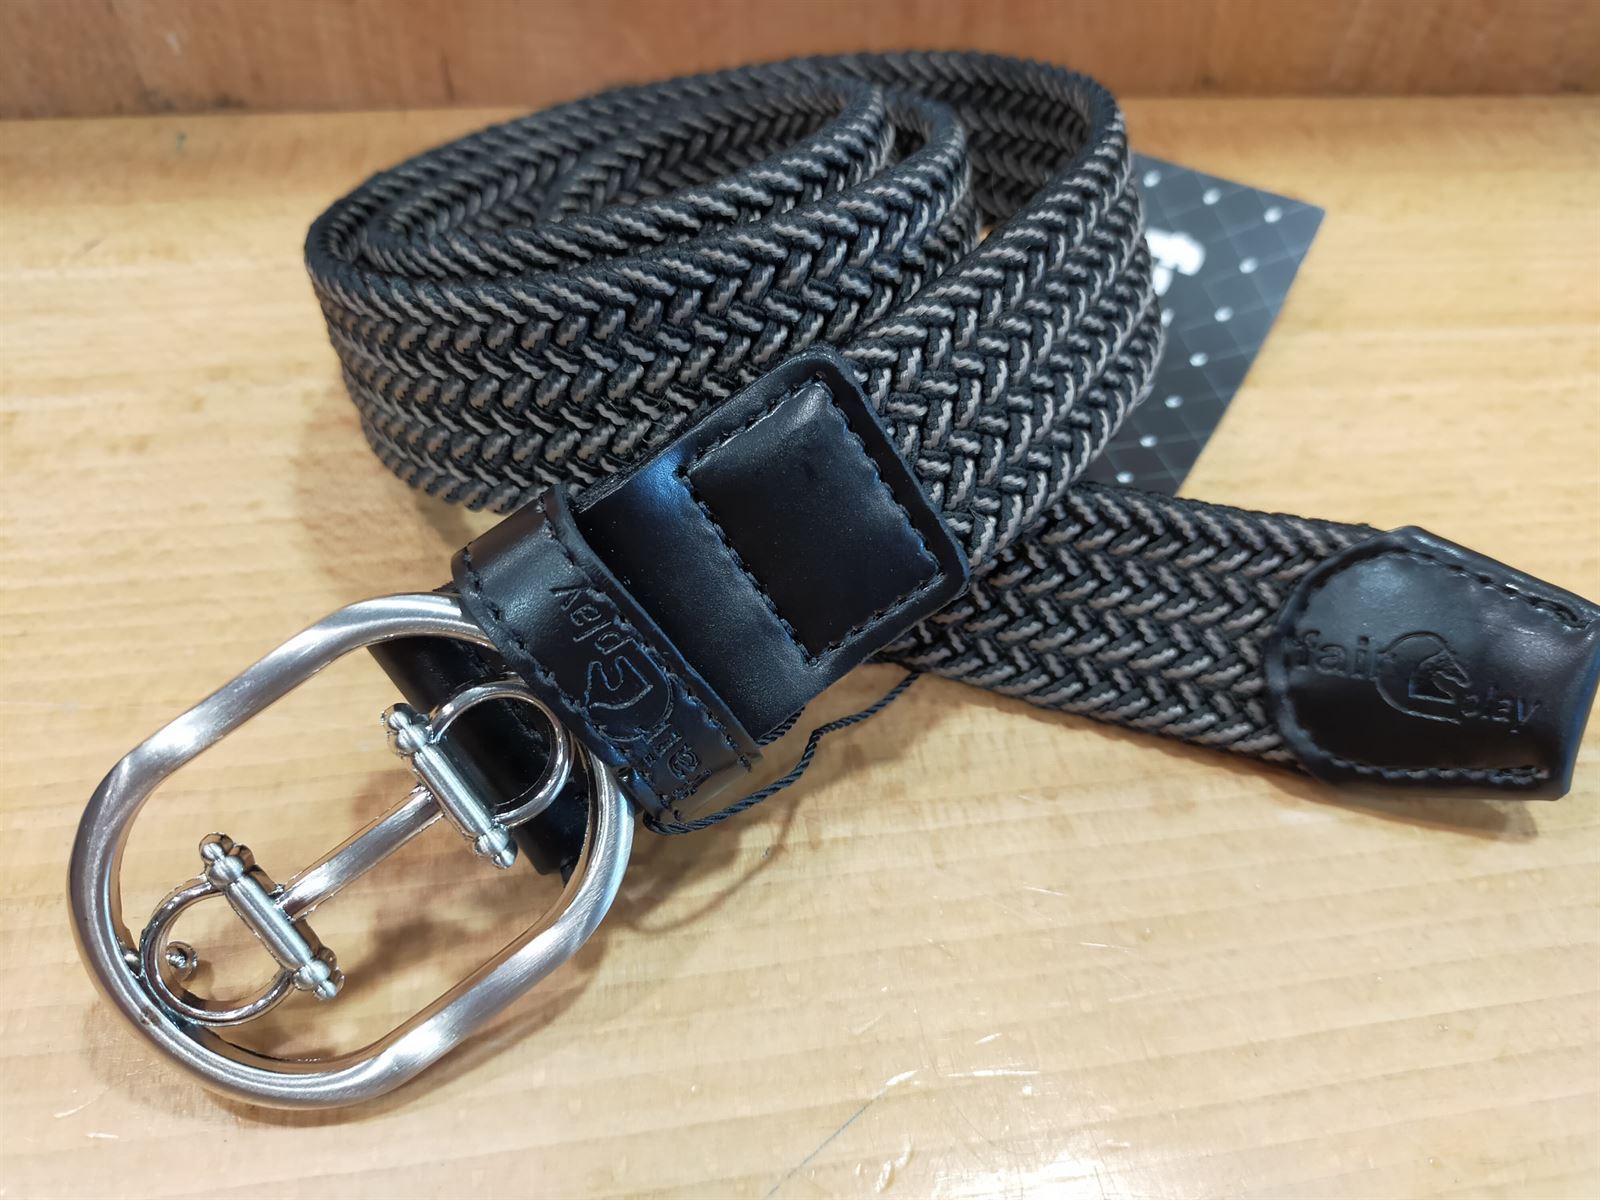 Cinturón elástico FAIR PLAY Valley color taupe/negro talla S/M - Imagen 2